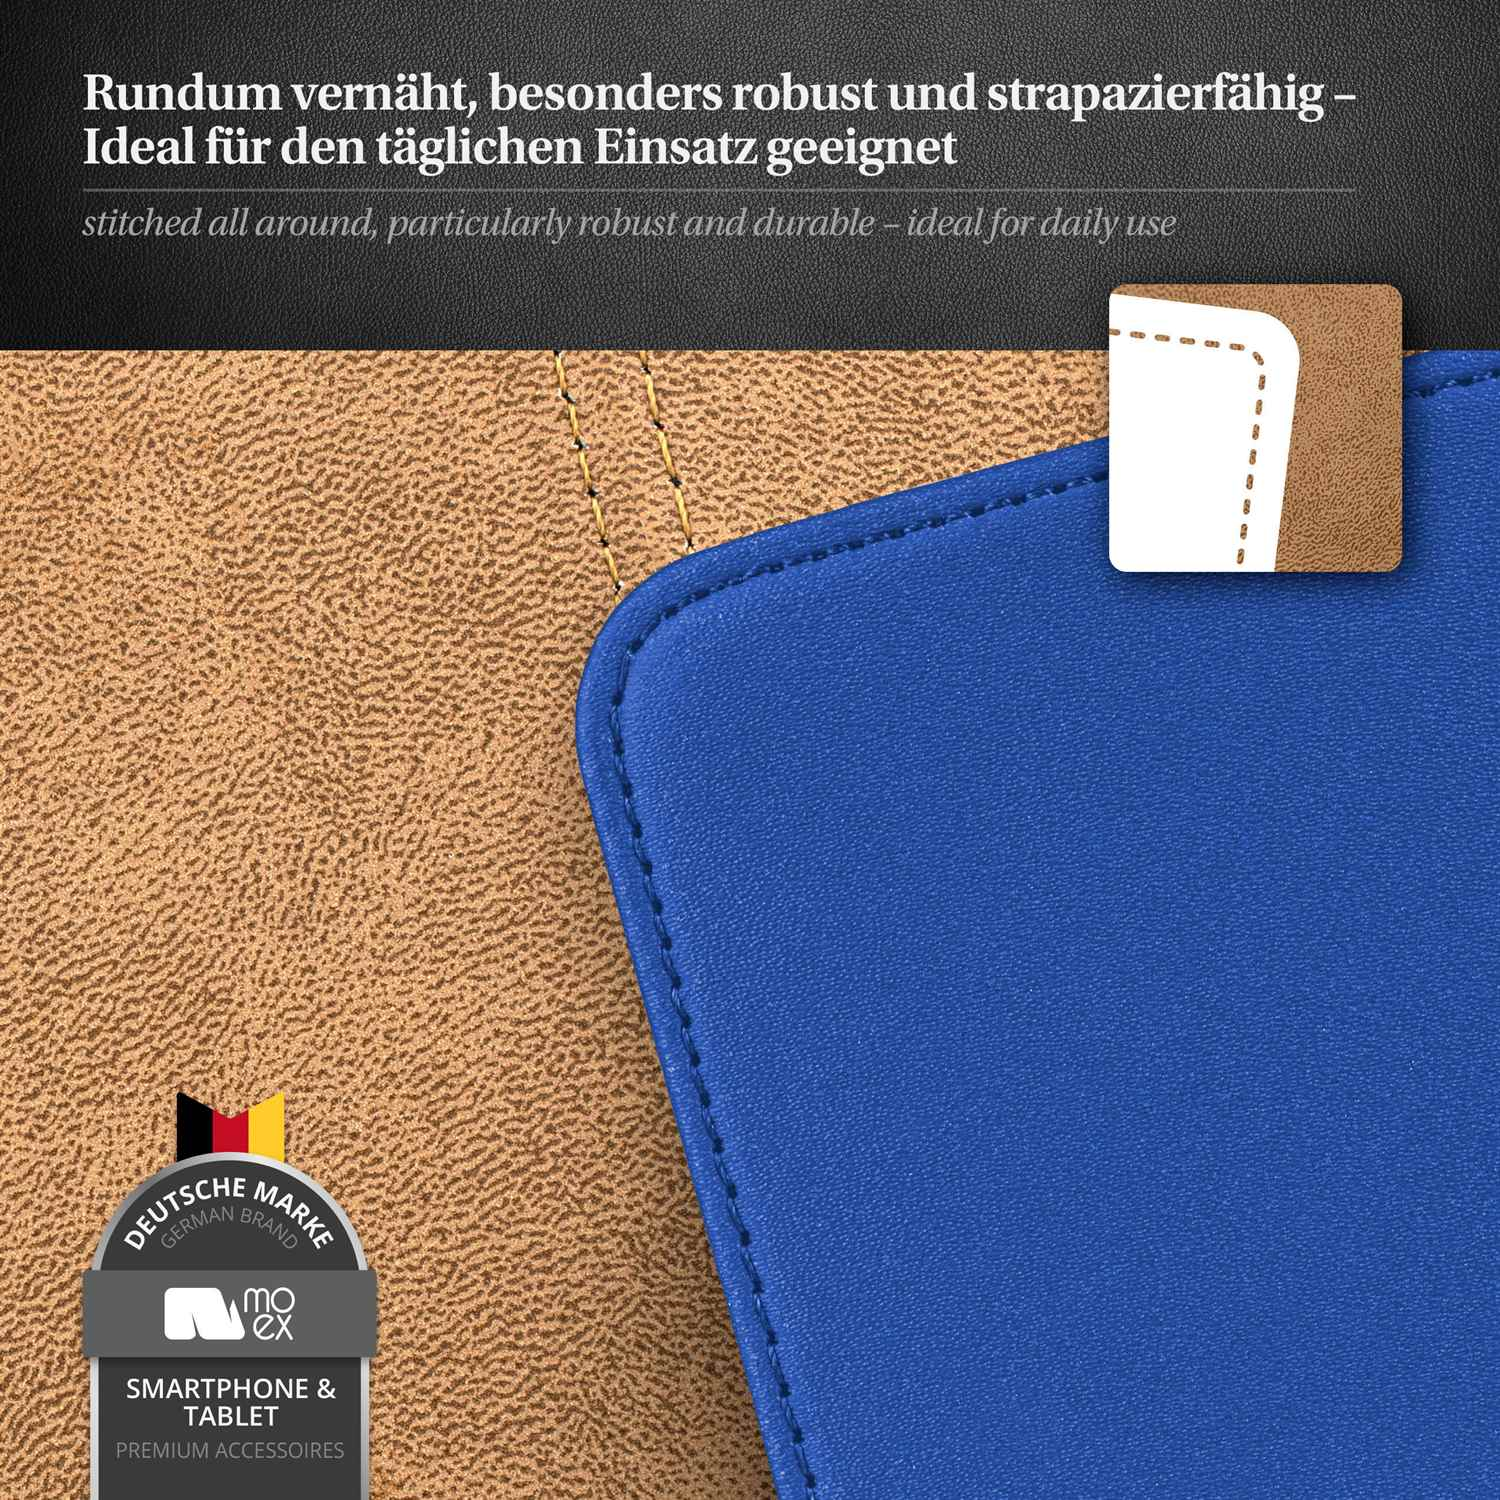 MOEX Flip Cover, Galaxy Royal-Blue S5, Flip Case, Samsung